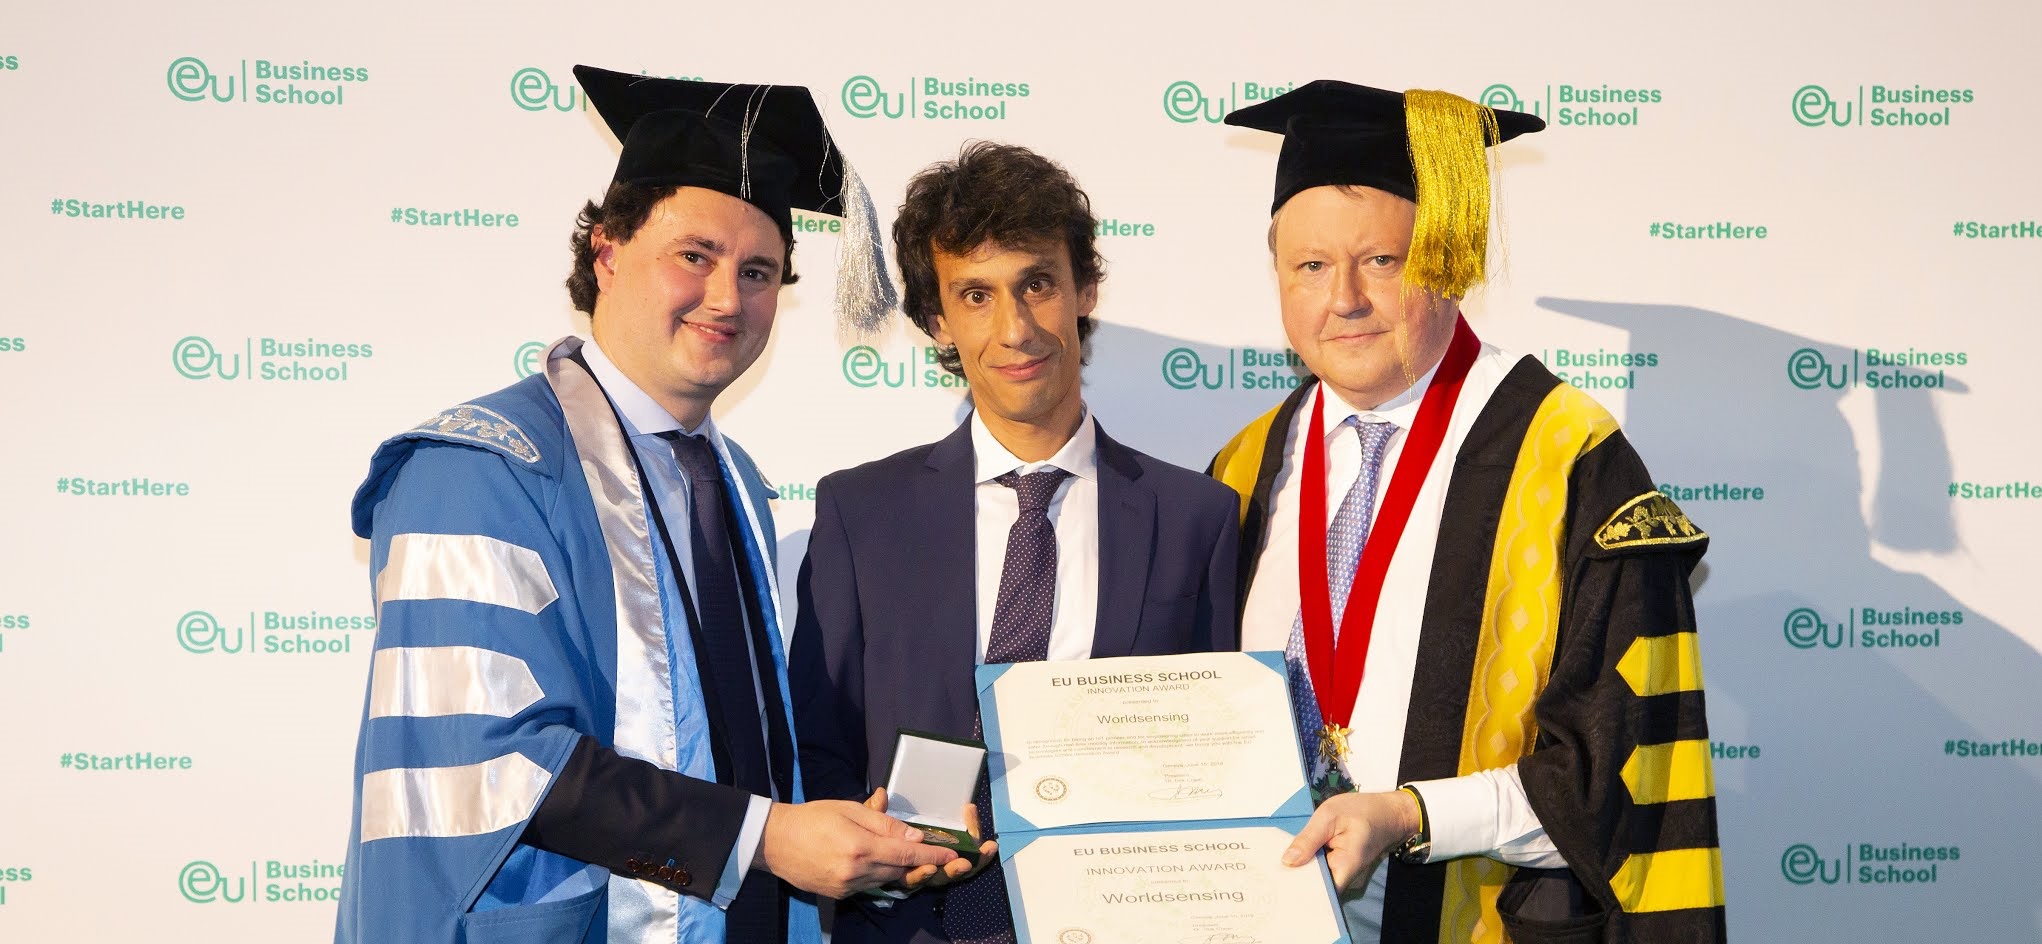 Worldsensing wins EU Business School Award for Innovation